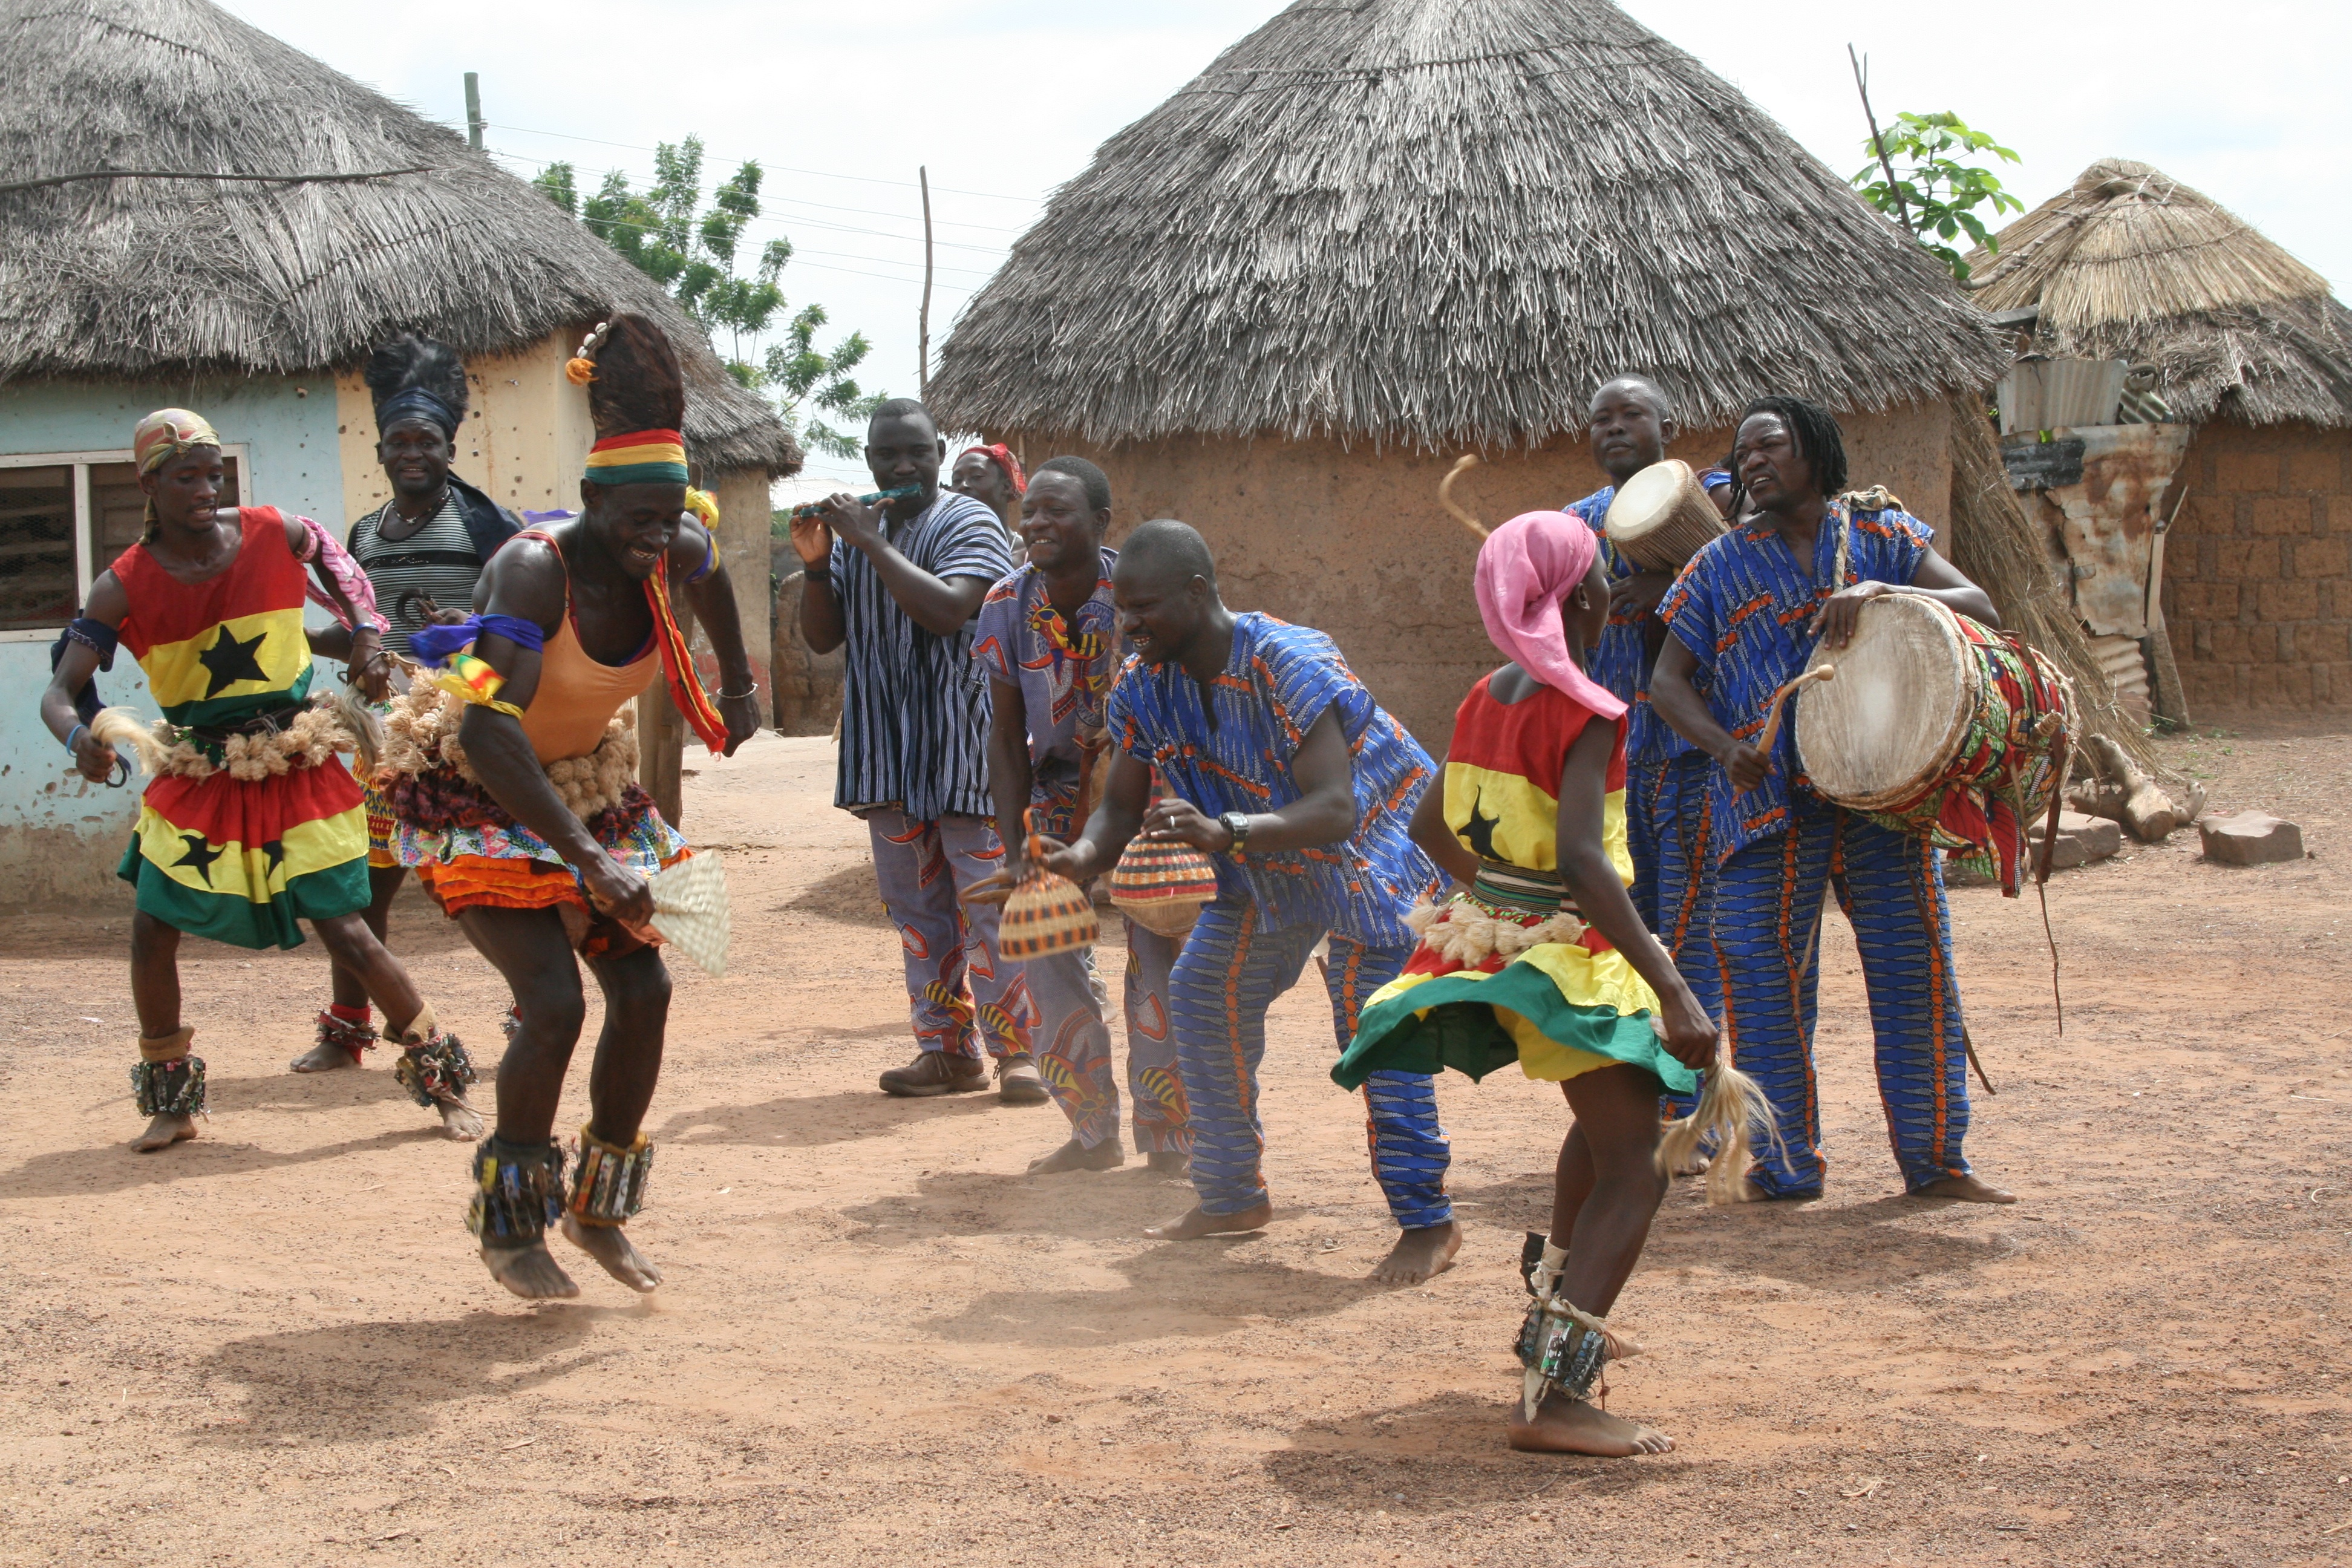 Show village. Сукко Анапа Африканская деревня. Африканская деревня поселок Сукко. Африканская деревня в Сукко танцы. Шоу Африканская деревня в Анапе.